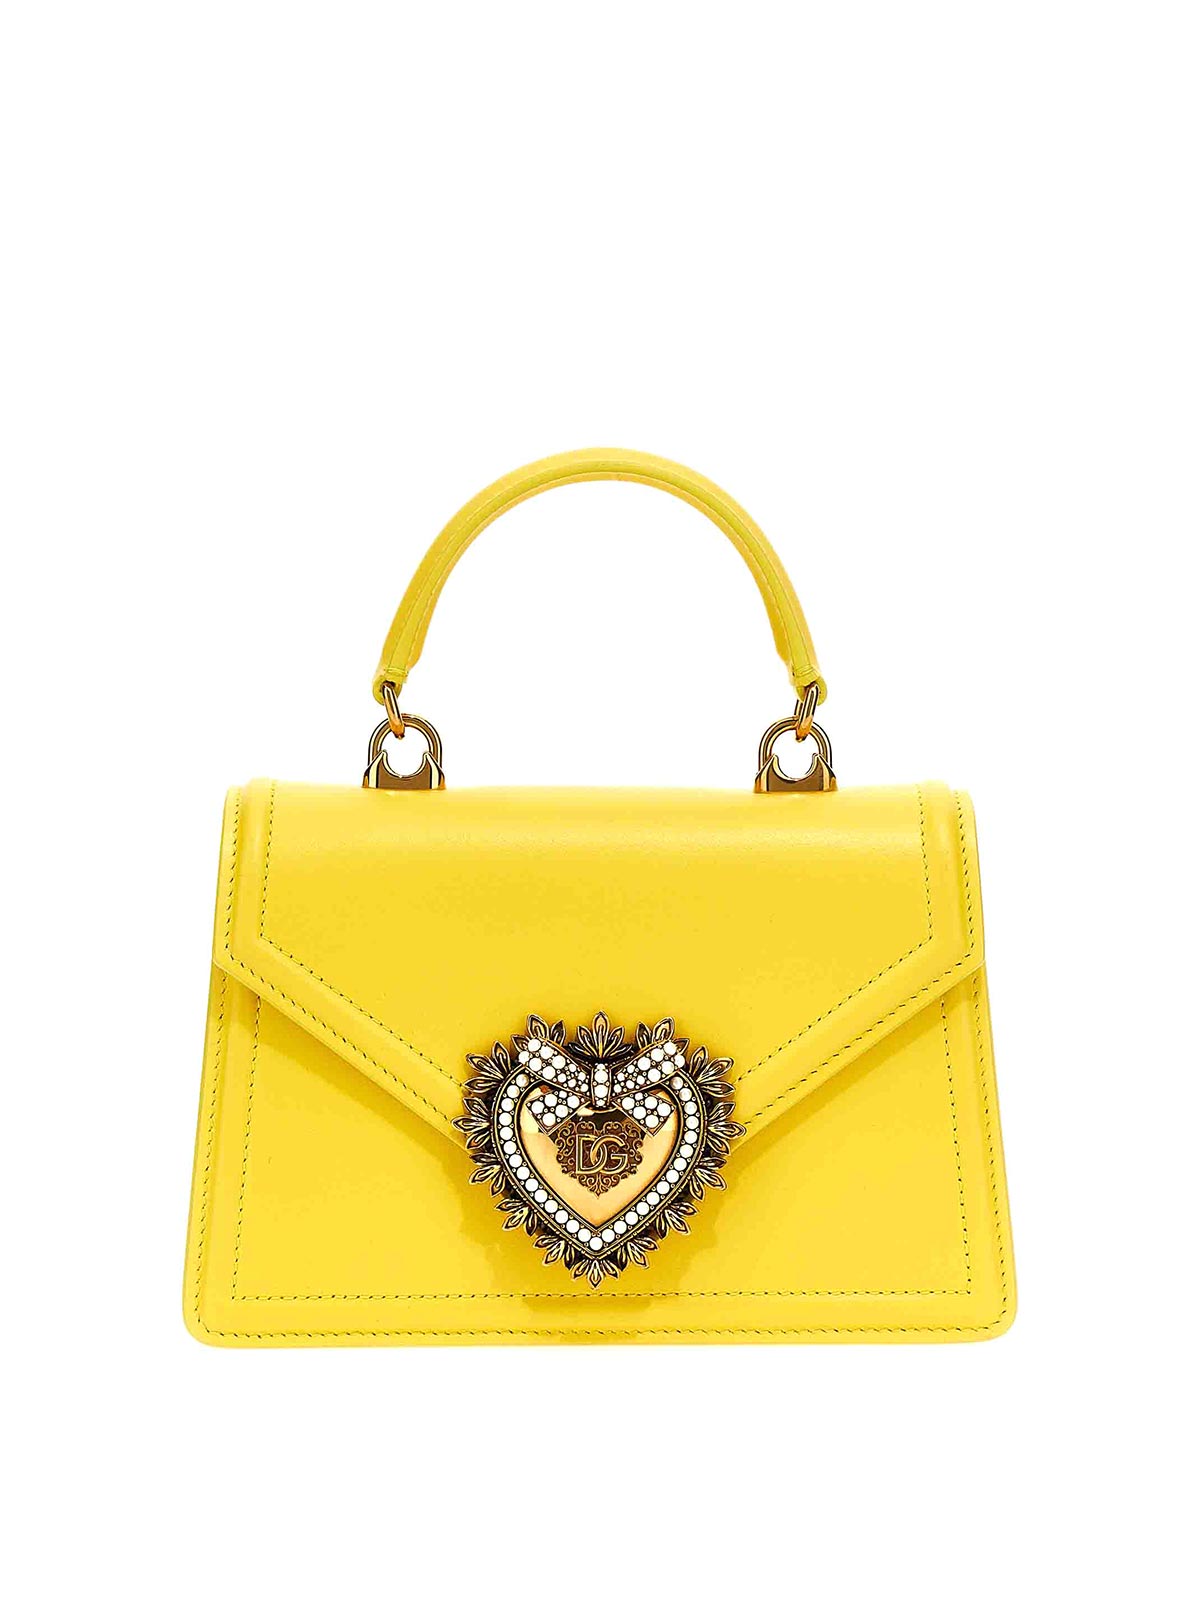 Dolce & Gabbana Devotion Small Handbag In Yellow